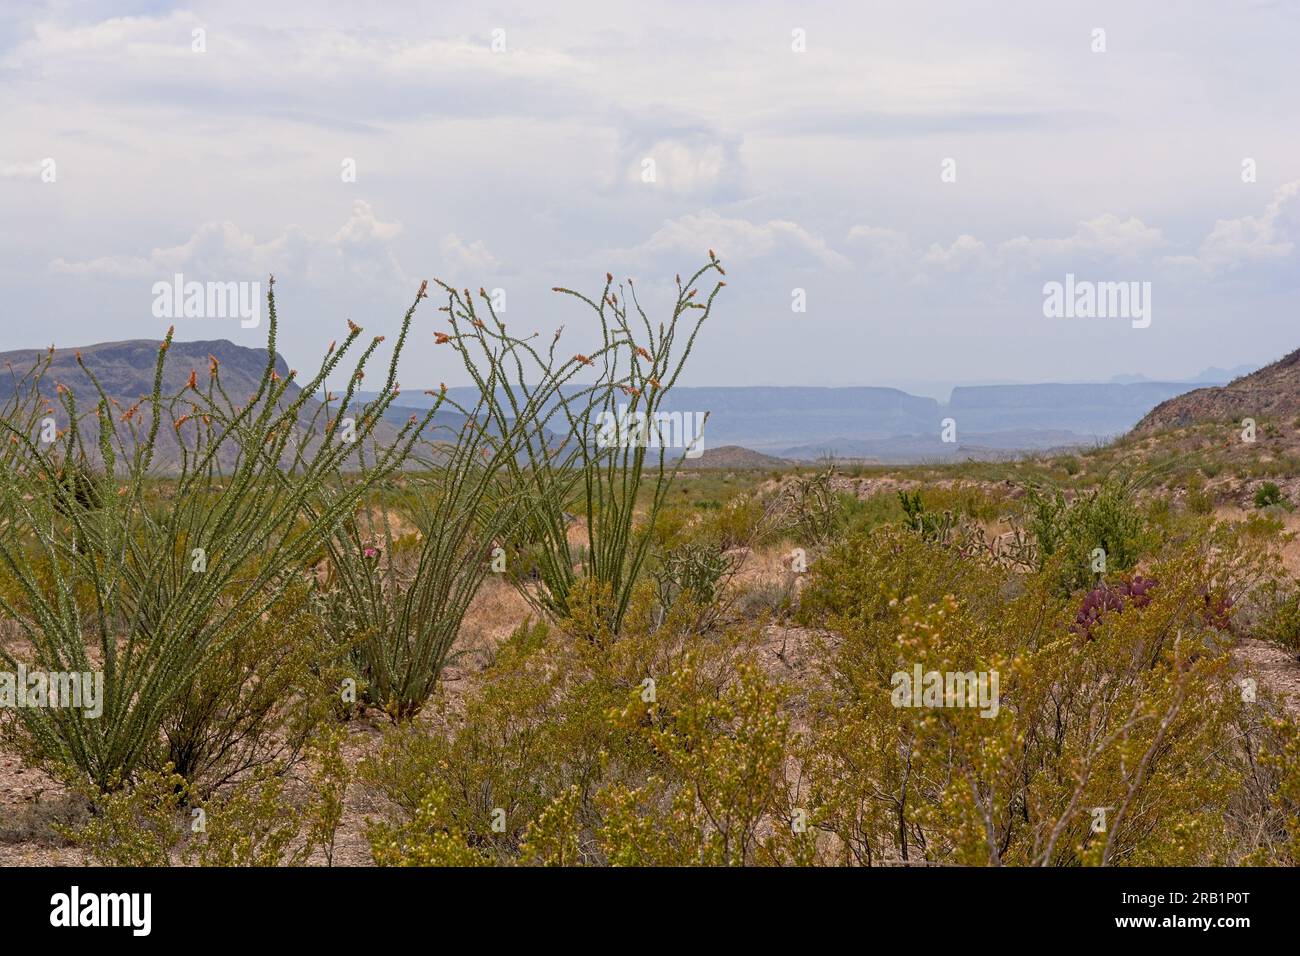 Ocotillo (Fouquieria splendens) stand over field of creosote bush (Larrea tridentata) and purple prickly pear cactus (Opuntia macrocentra) in Chihuahu Stock Photo